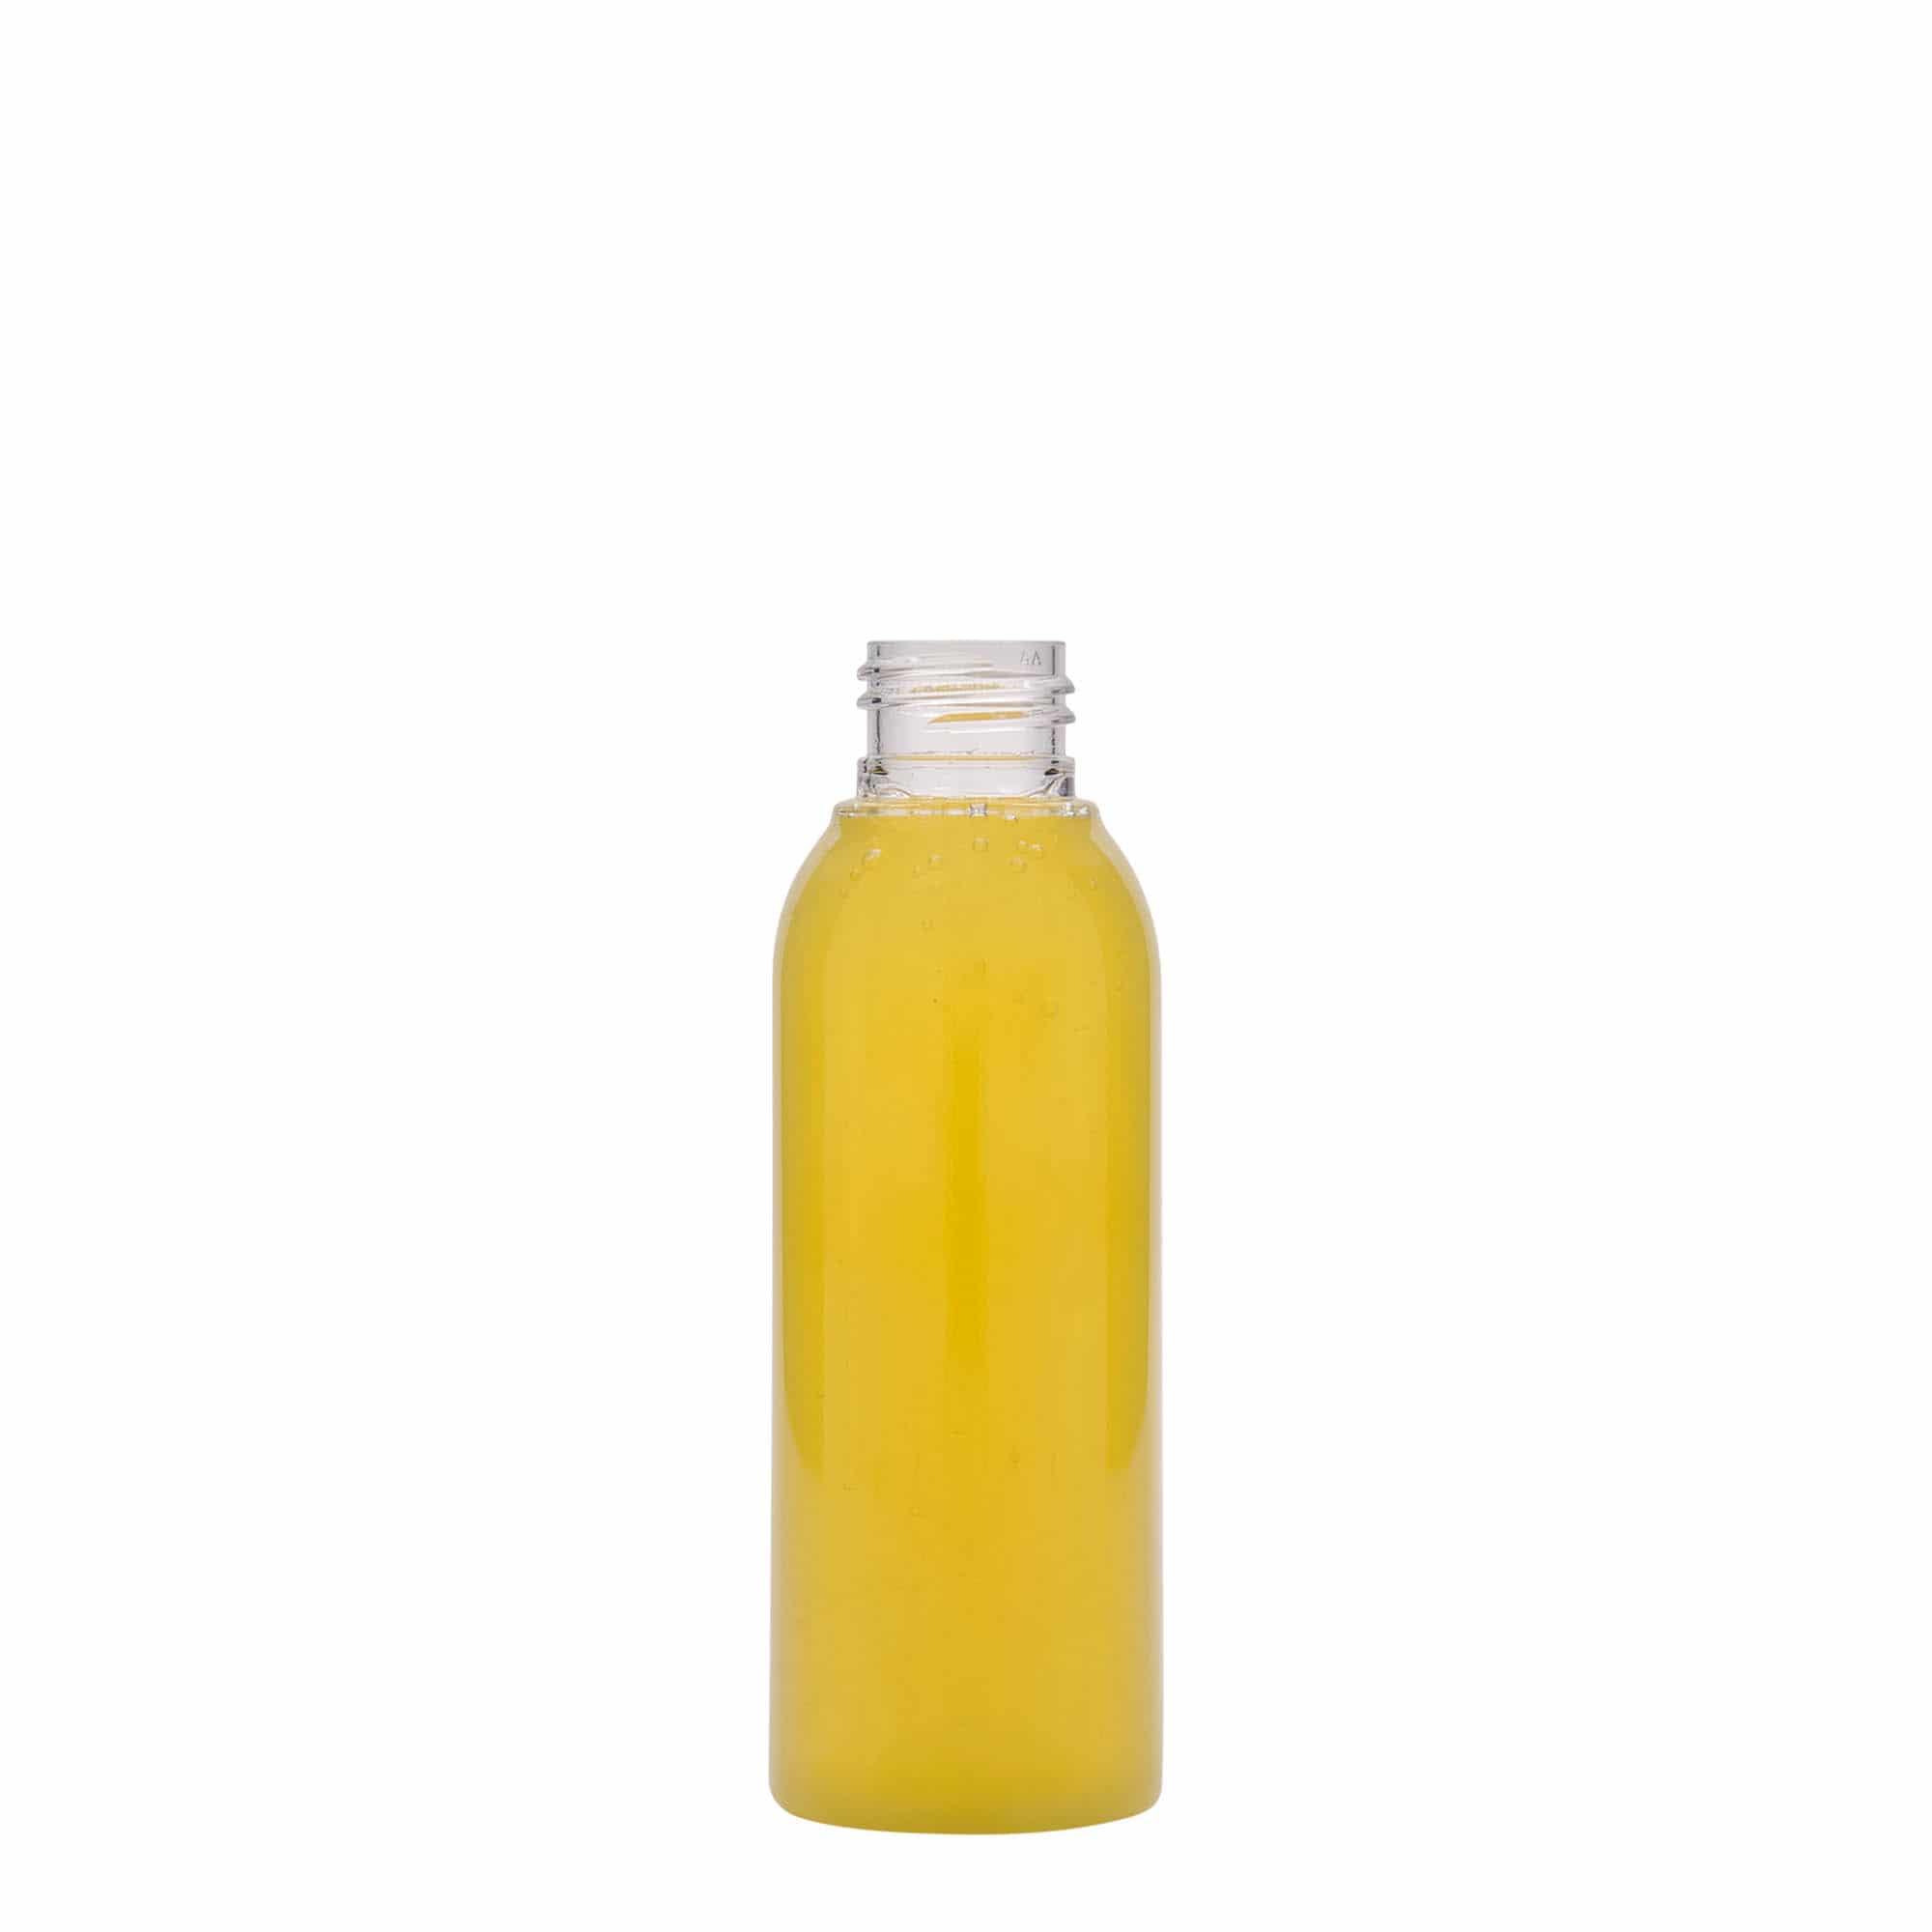 Botella de PET 'Pegasus' de 125 ml, plástico, boca: GPI 20/410